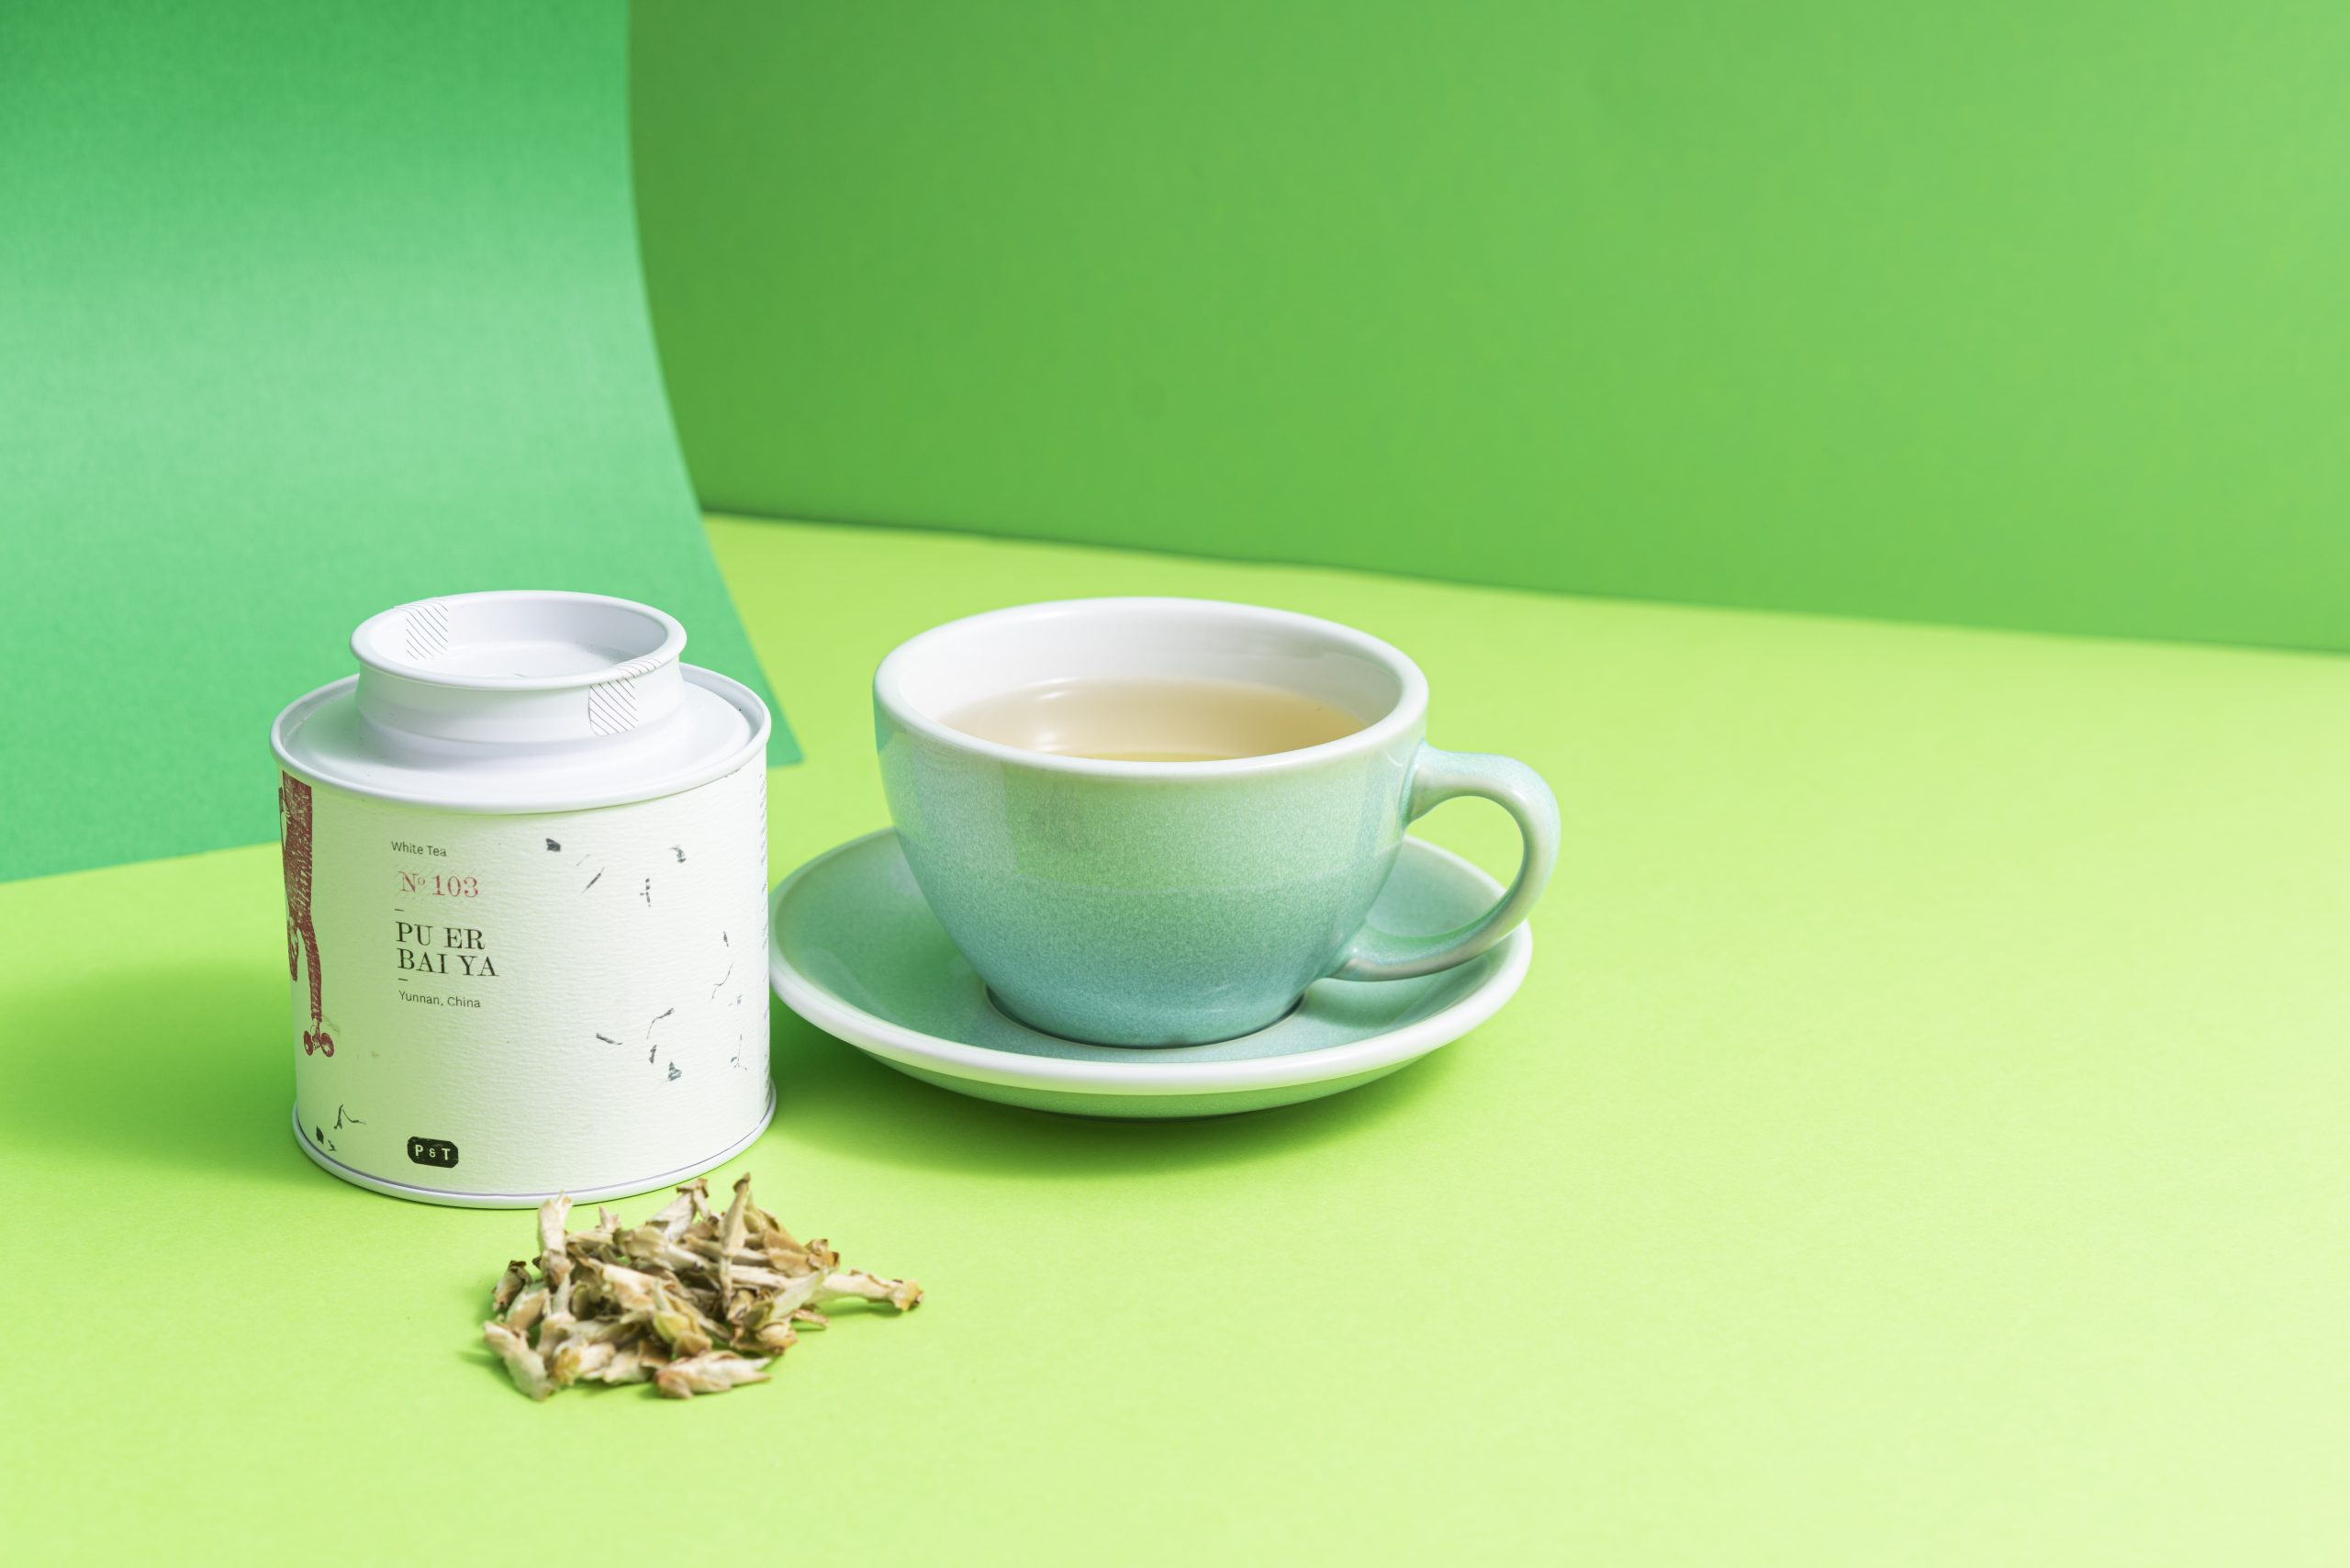 Paper & Tea - Pu Er Bai Ya herbata miesiąca stycznia